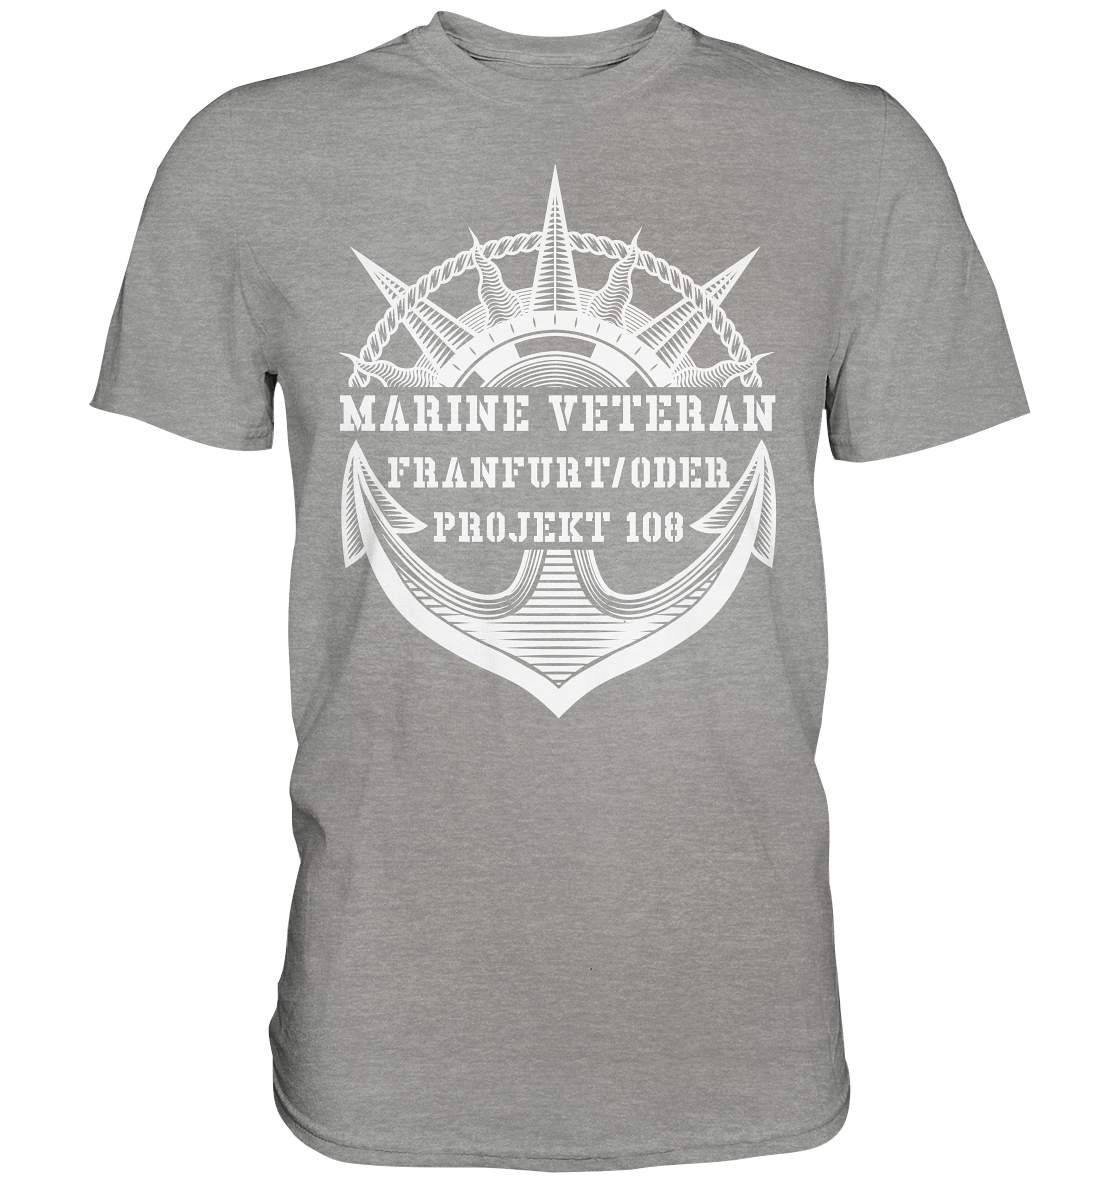 Projekt 108 FRANKFURT/ODER Marine Veteran - Premium Shirt